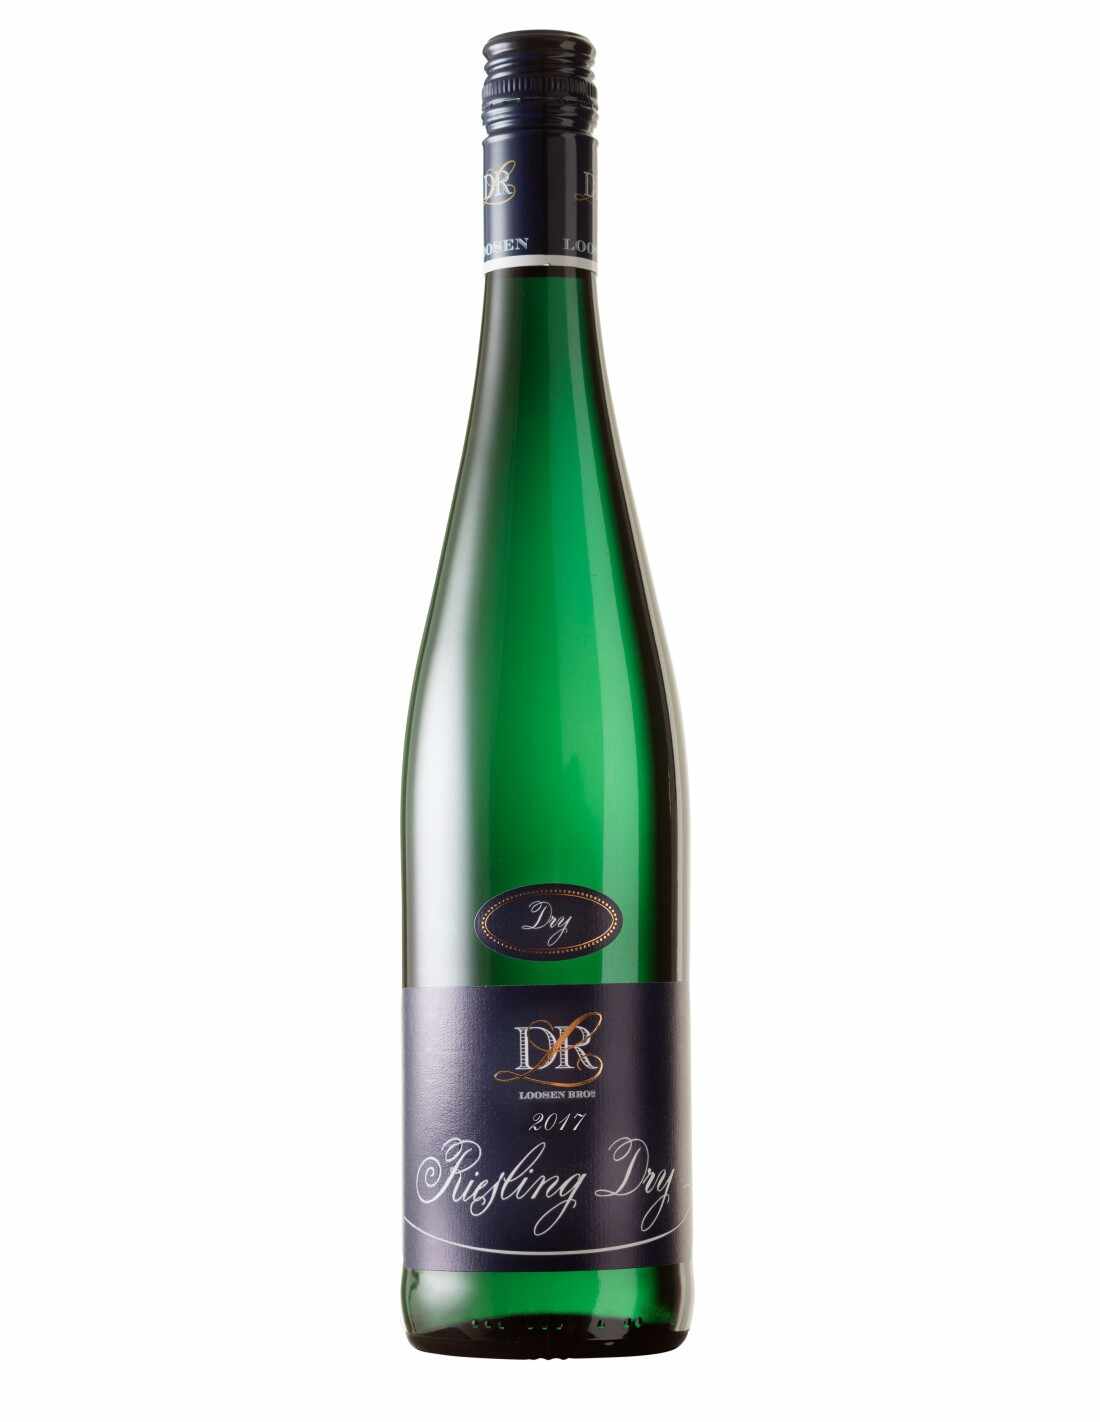 Vin alb sec, Riesling, Dr. Loosen, 0.75L, 8.5% alc., Germania